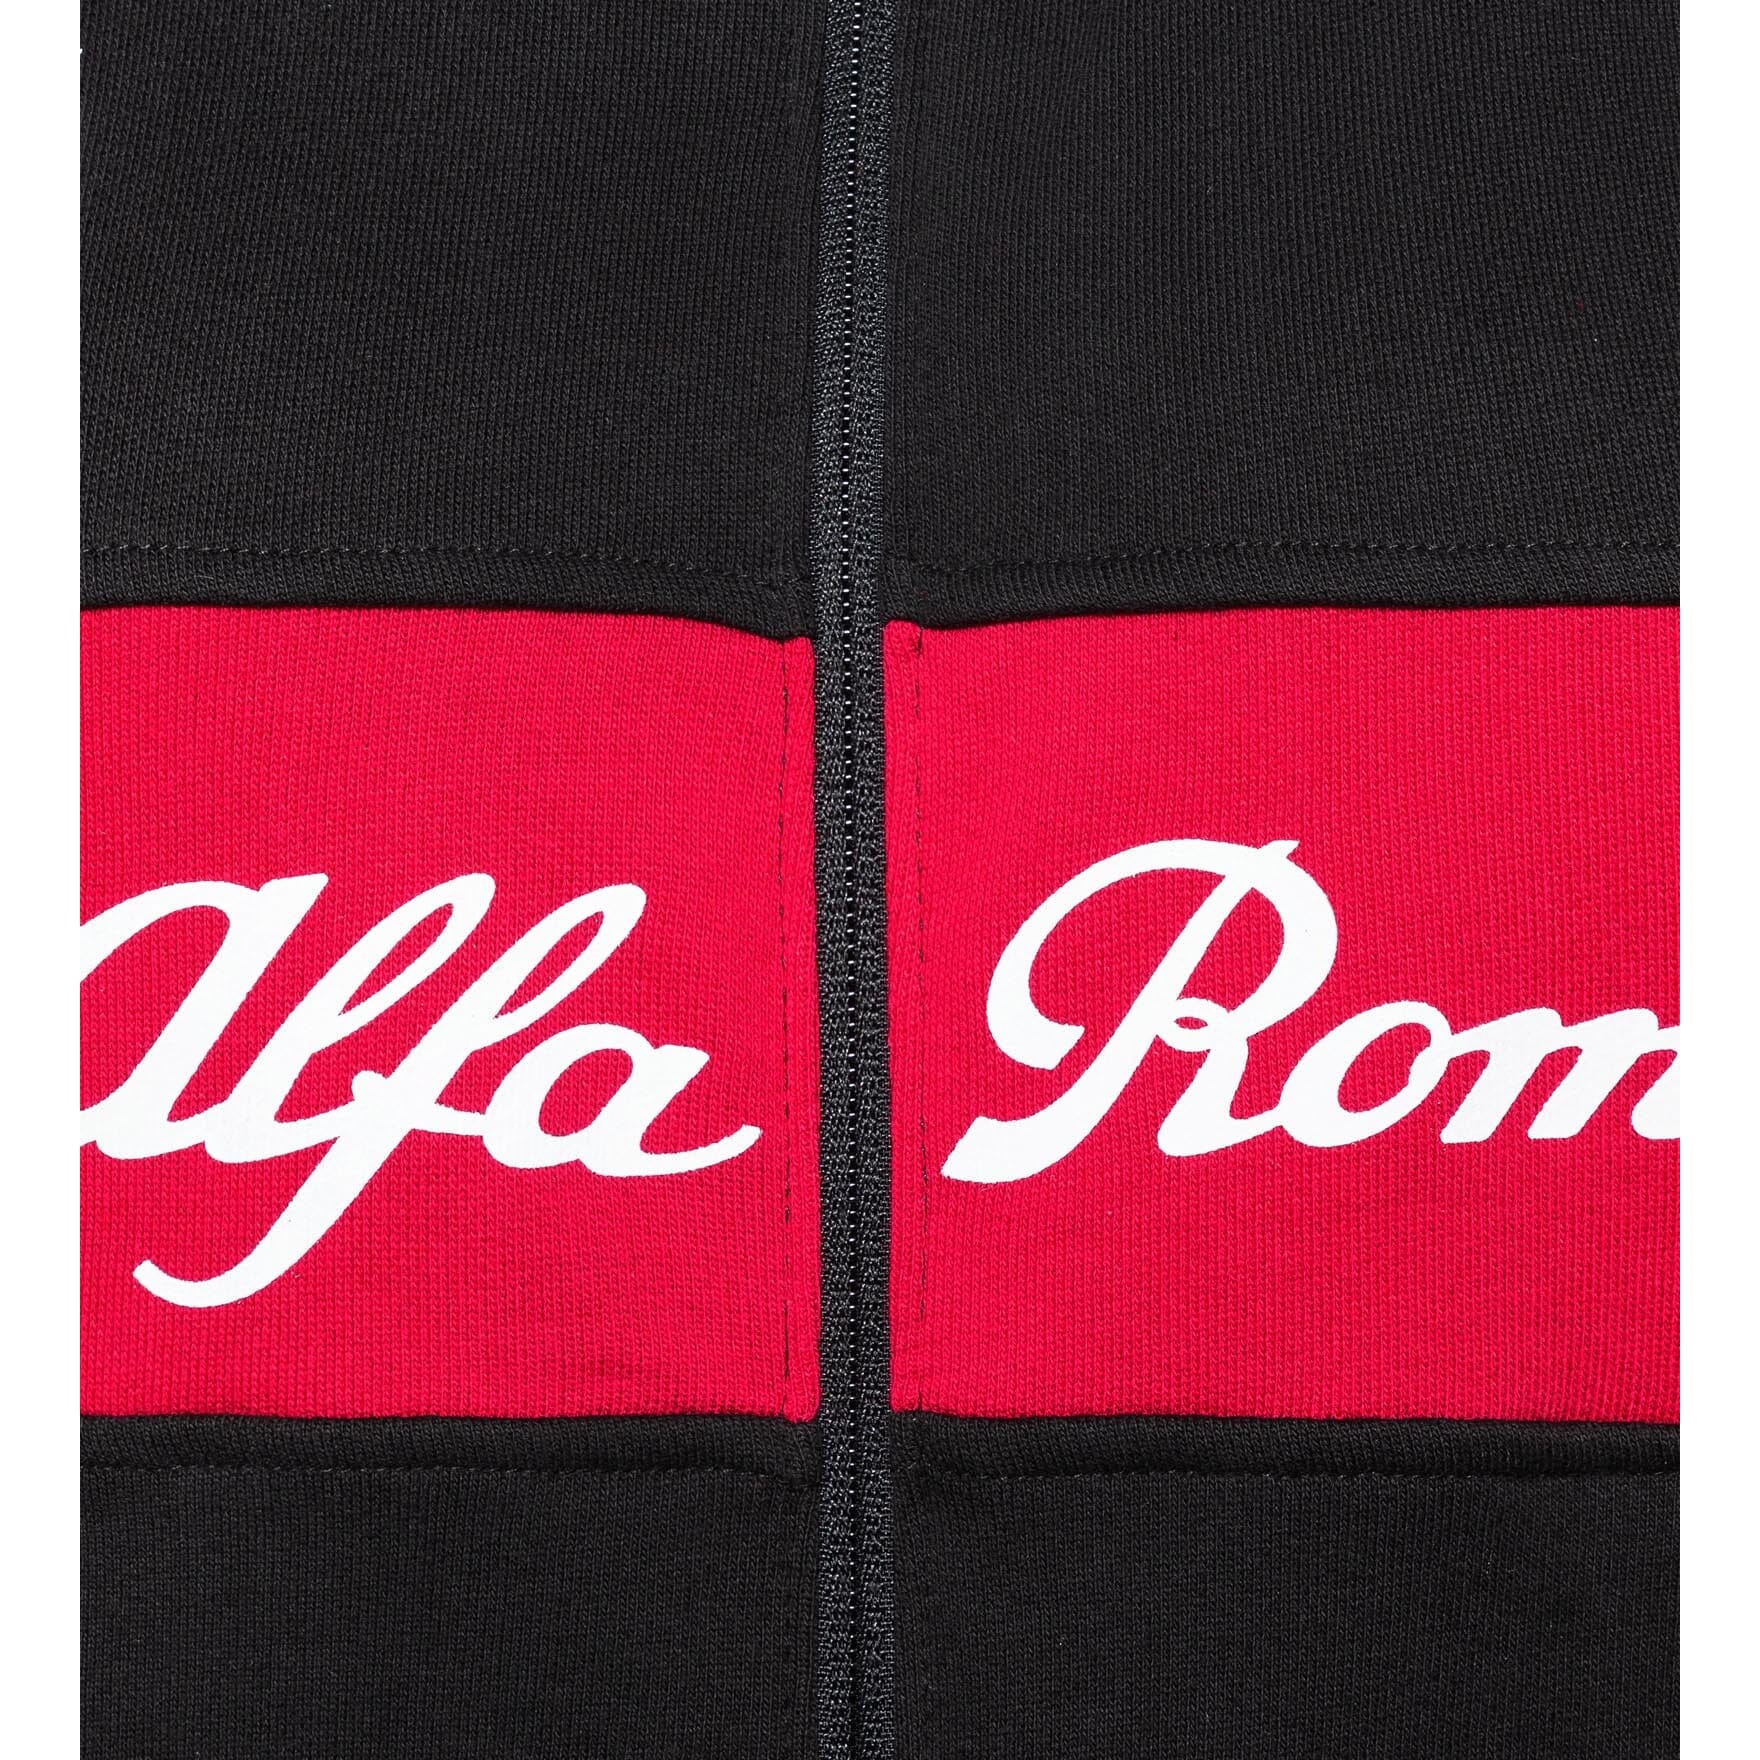 Alfa Romeo Racing F1 2023 Women's Team Full Zip Sweatshirt - Black